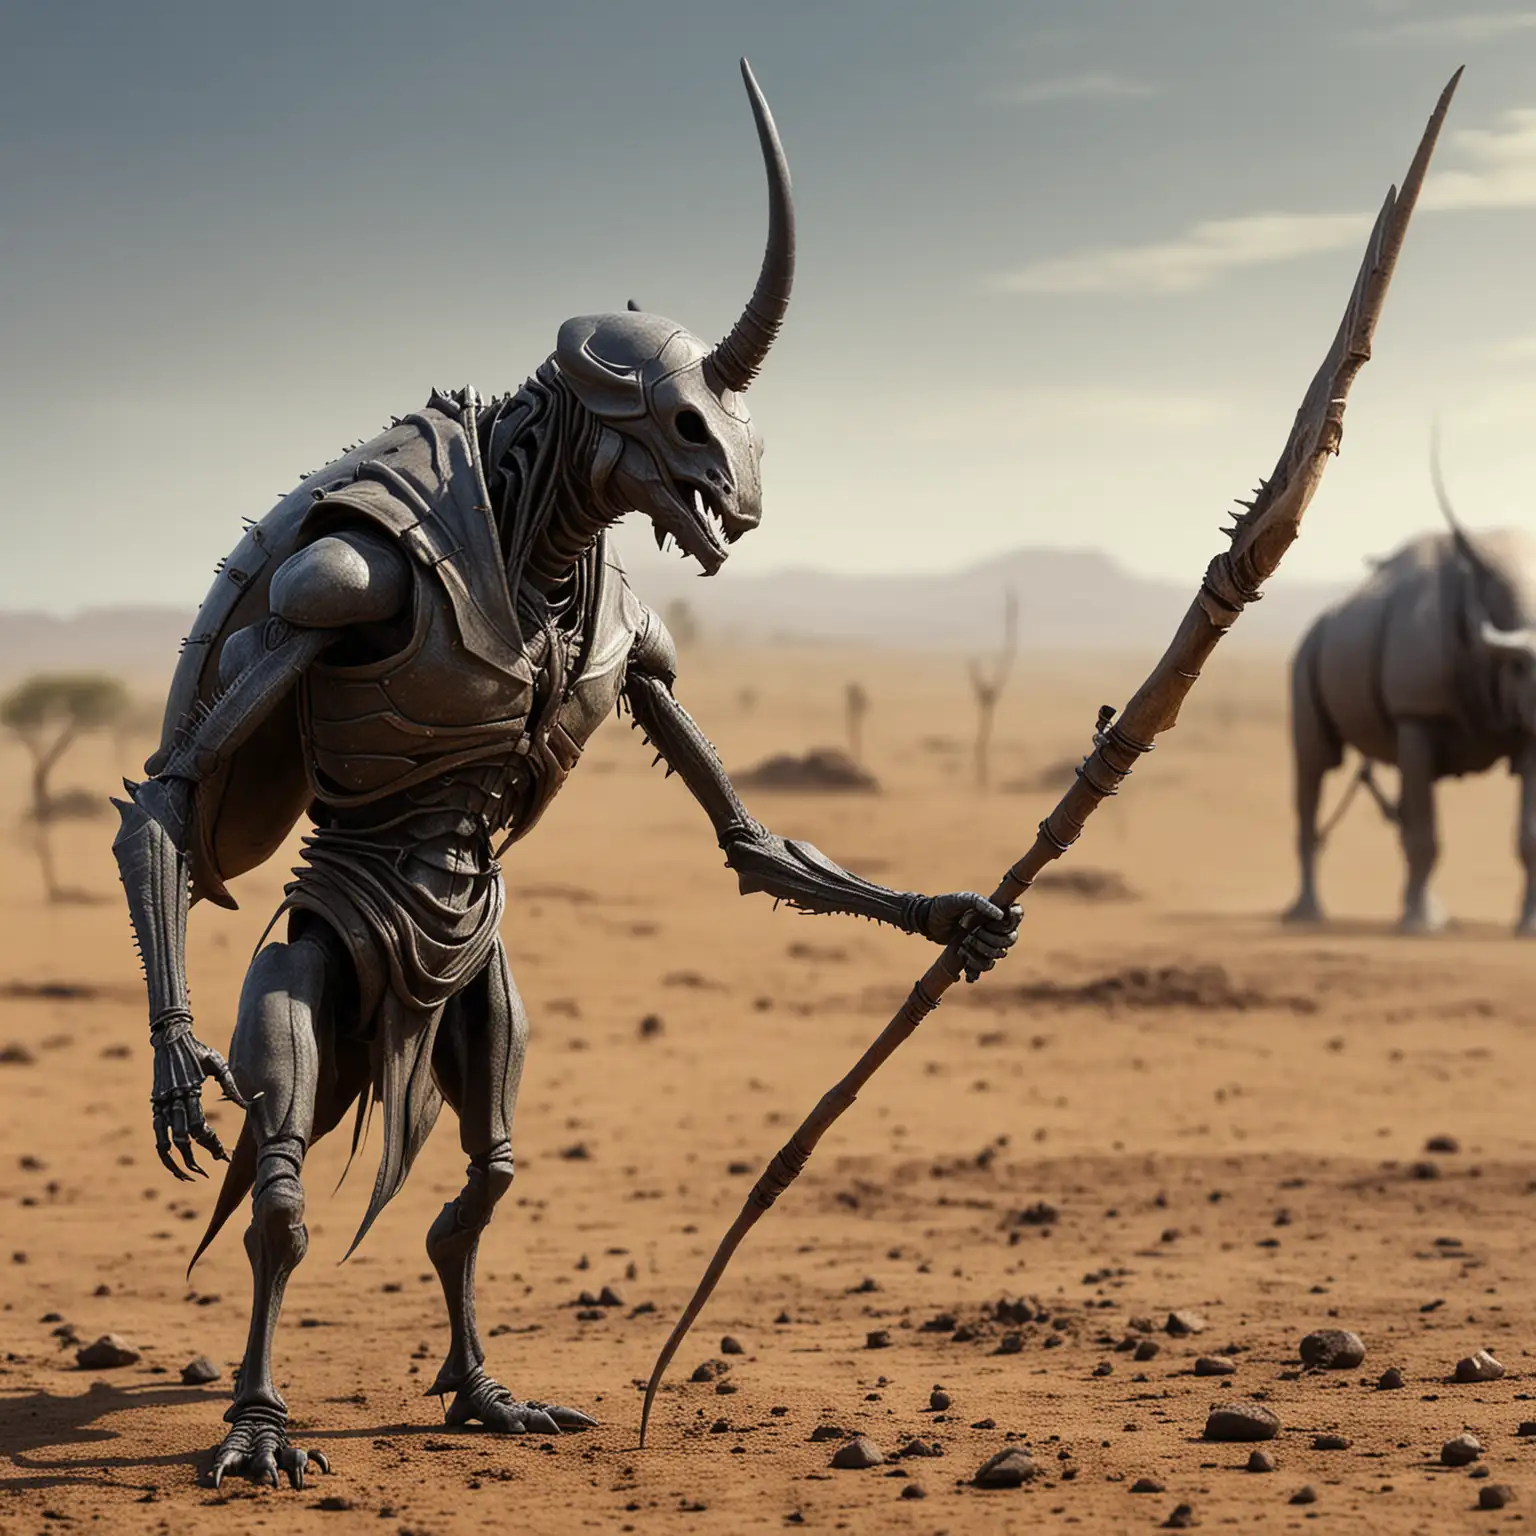 skinny, humanoid beetle, holding spear, on a battlefield, rhinoceros horn